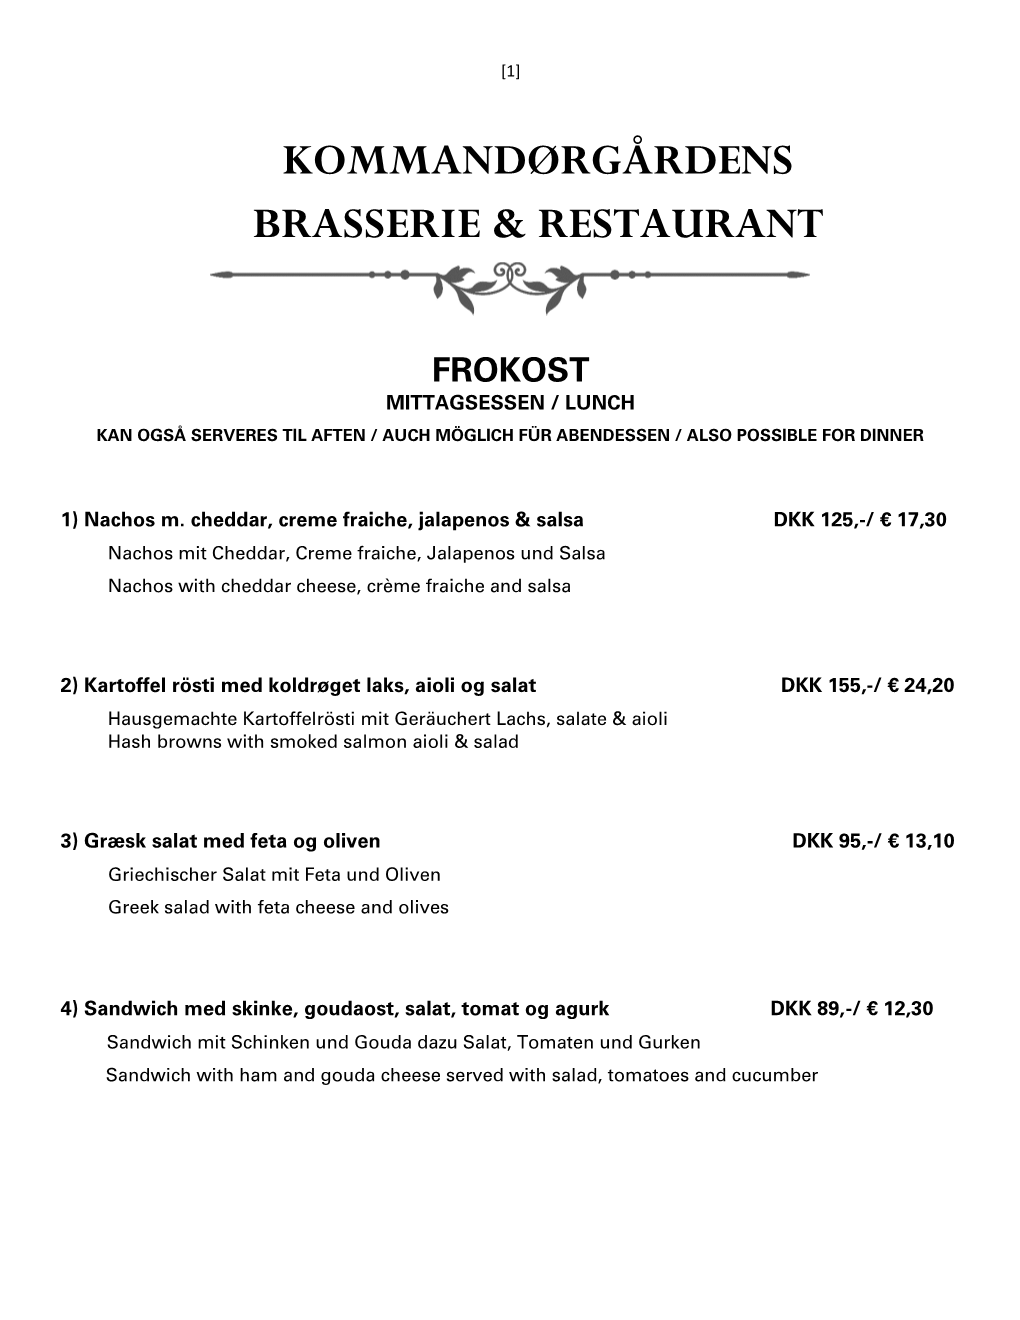 Kommandørgårdens Brasserie & Restaurant